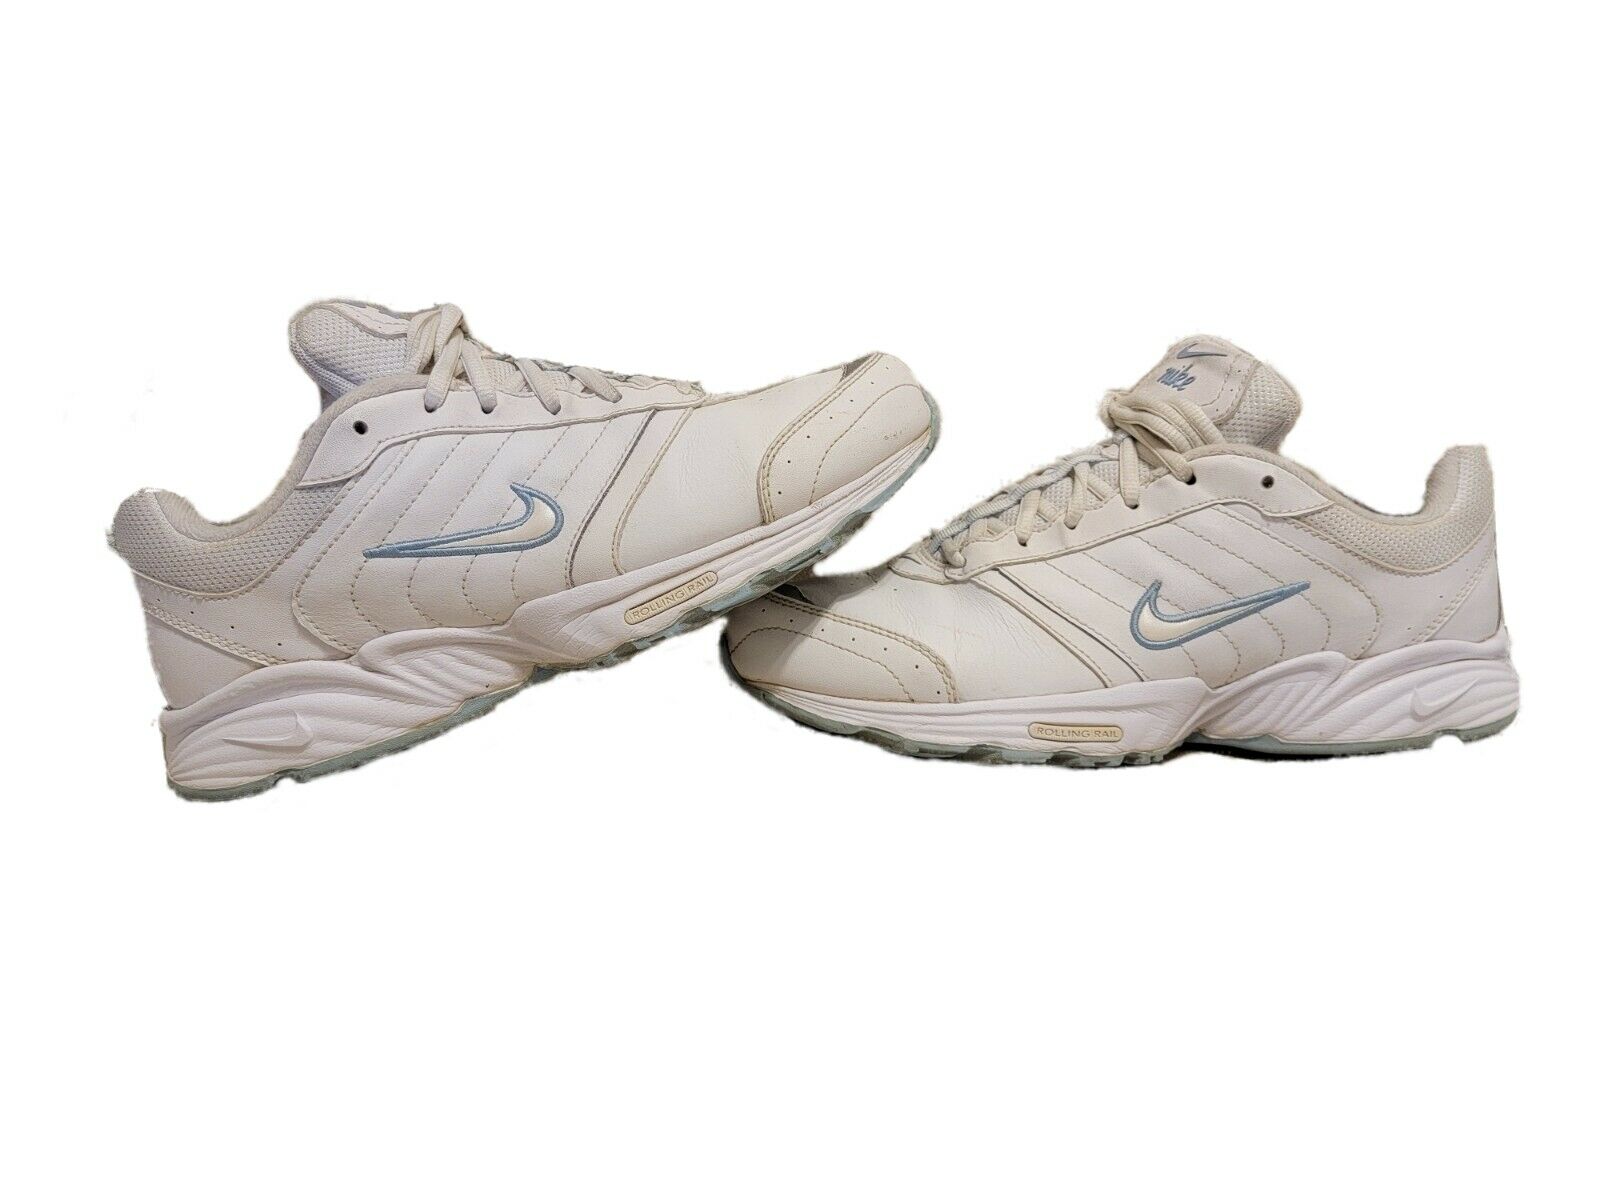 Nike View II Womens Sz 8.5 White/ Blue Rolling Rail Walking Shoes #318172-111